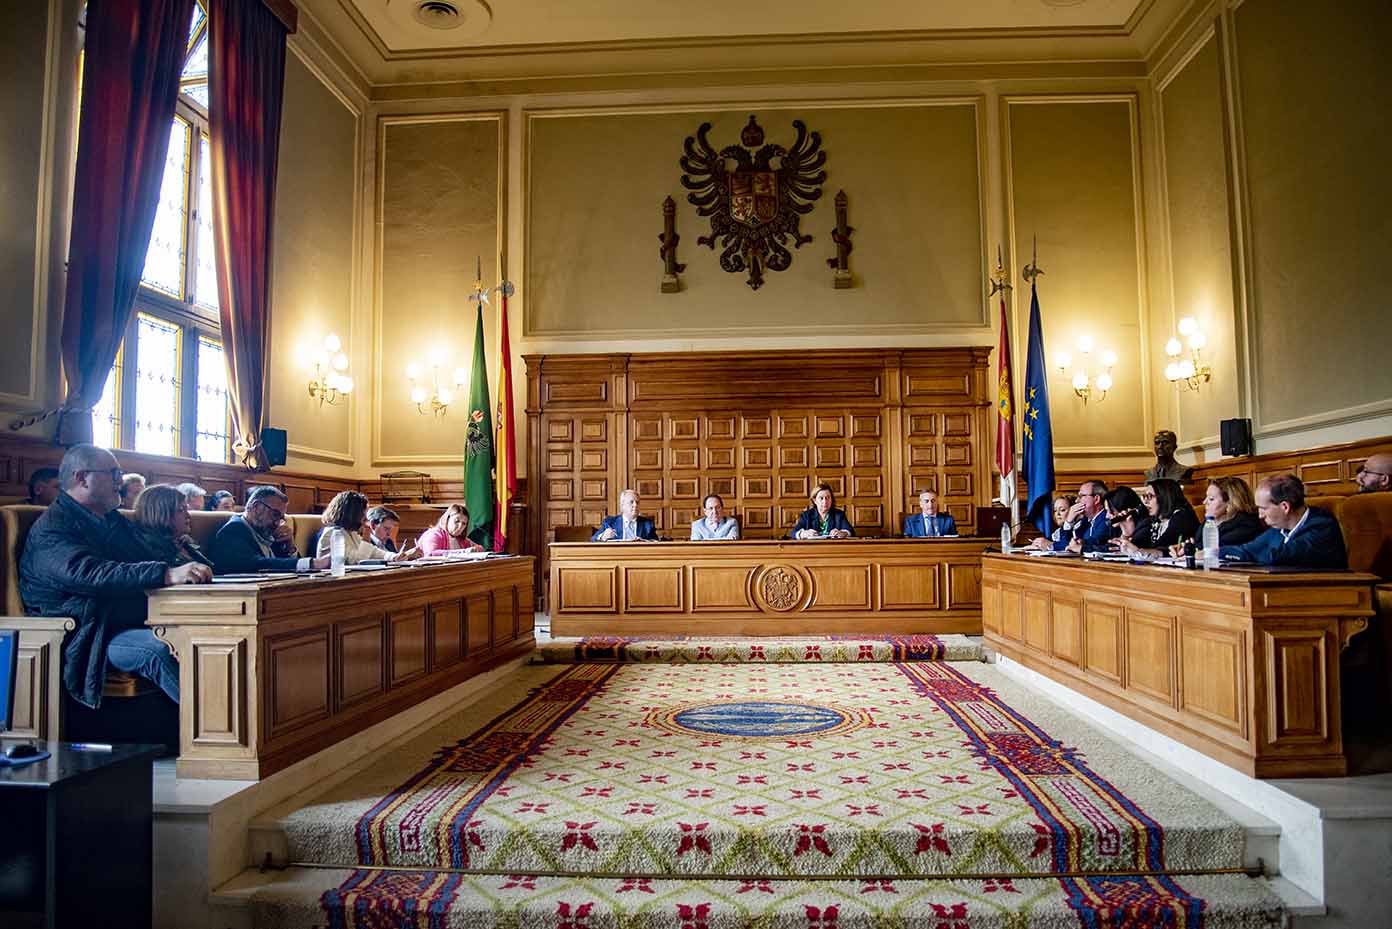 Pleno de la Diputación de Toledo. Foto: Rebeca Arango.